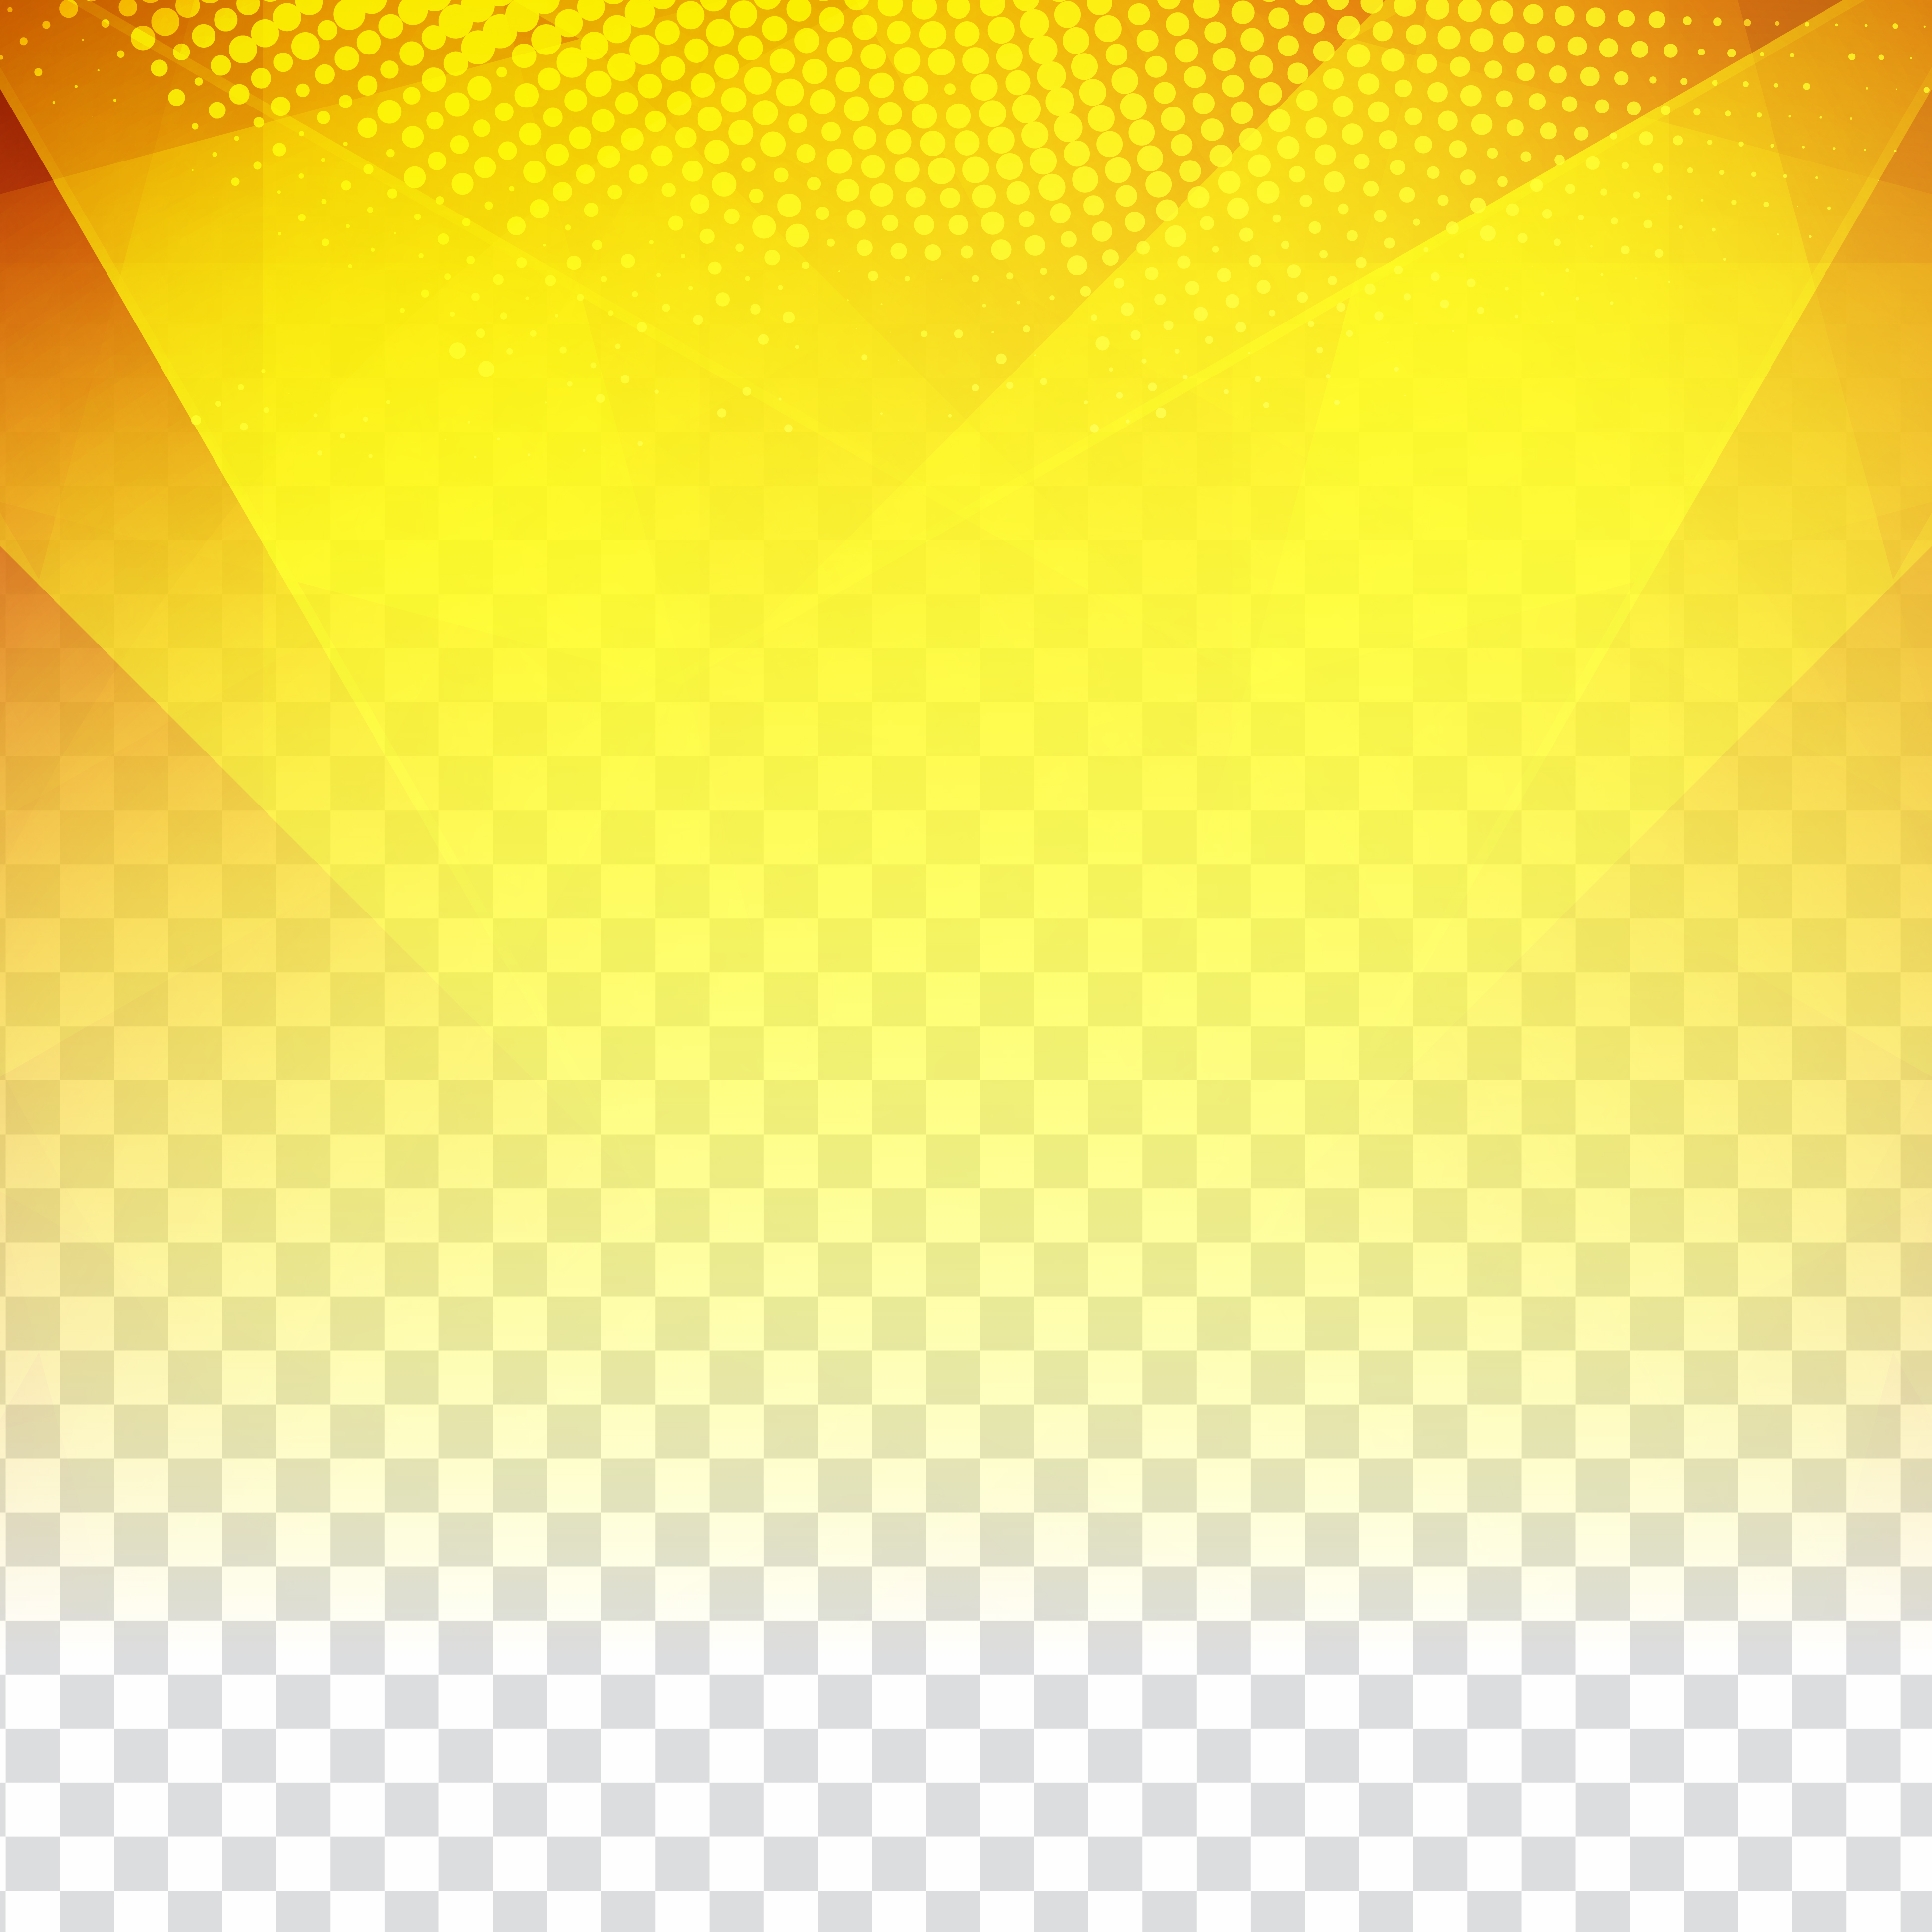 Abstract modern yellow geometric polygonal background 261572 Vector Art ...